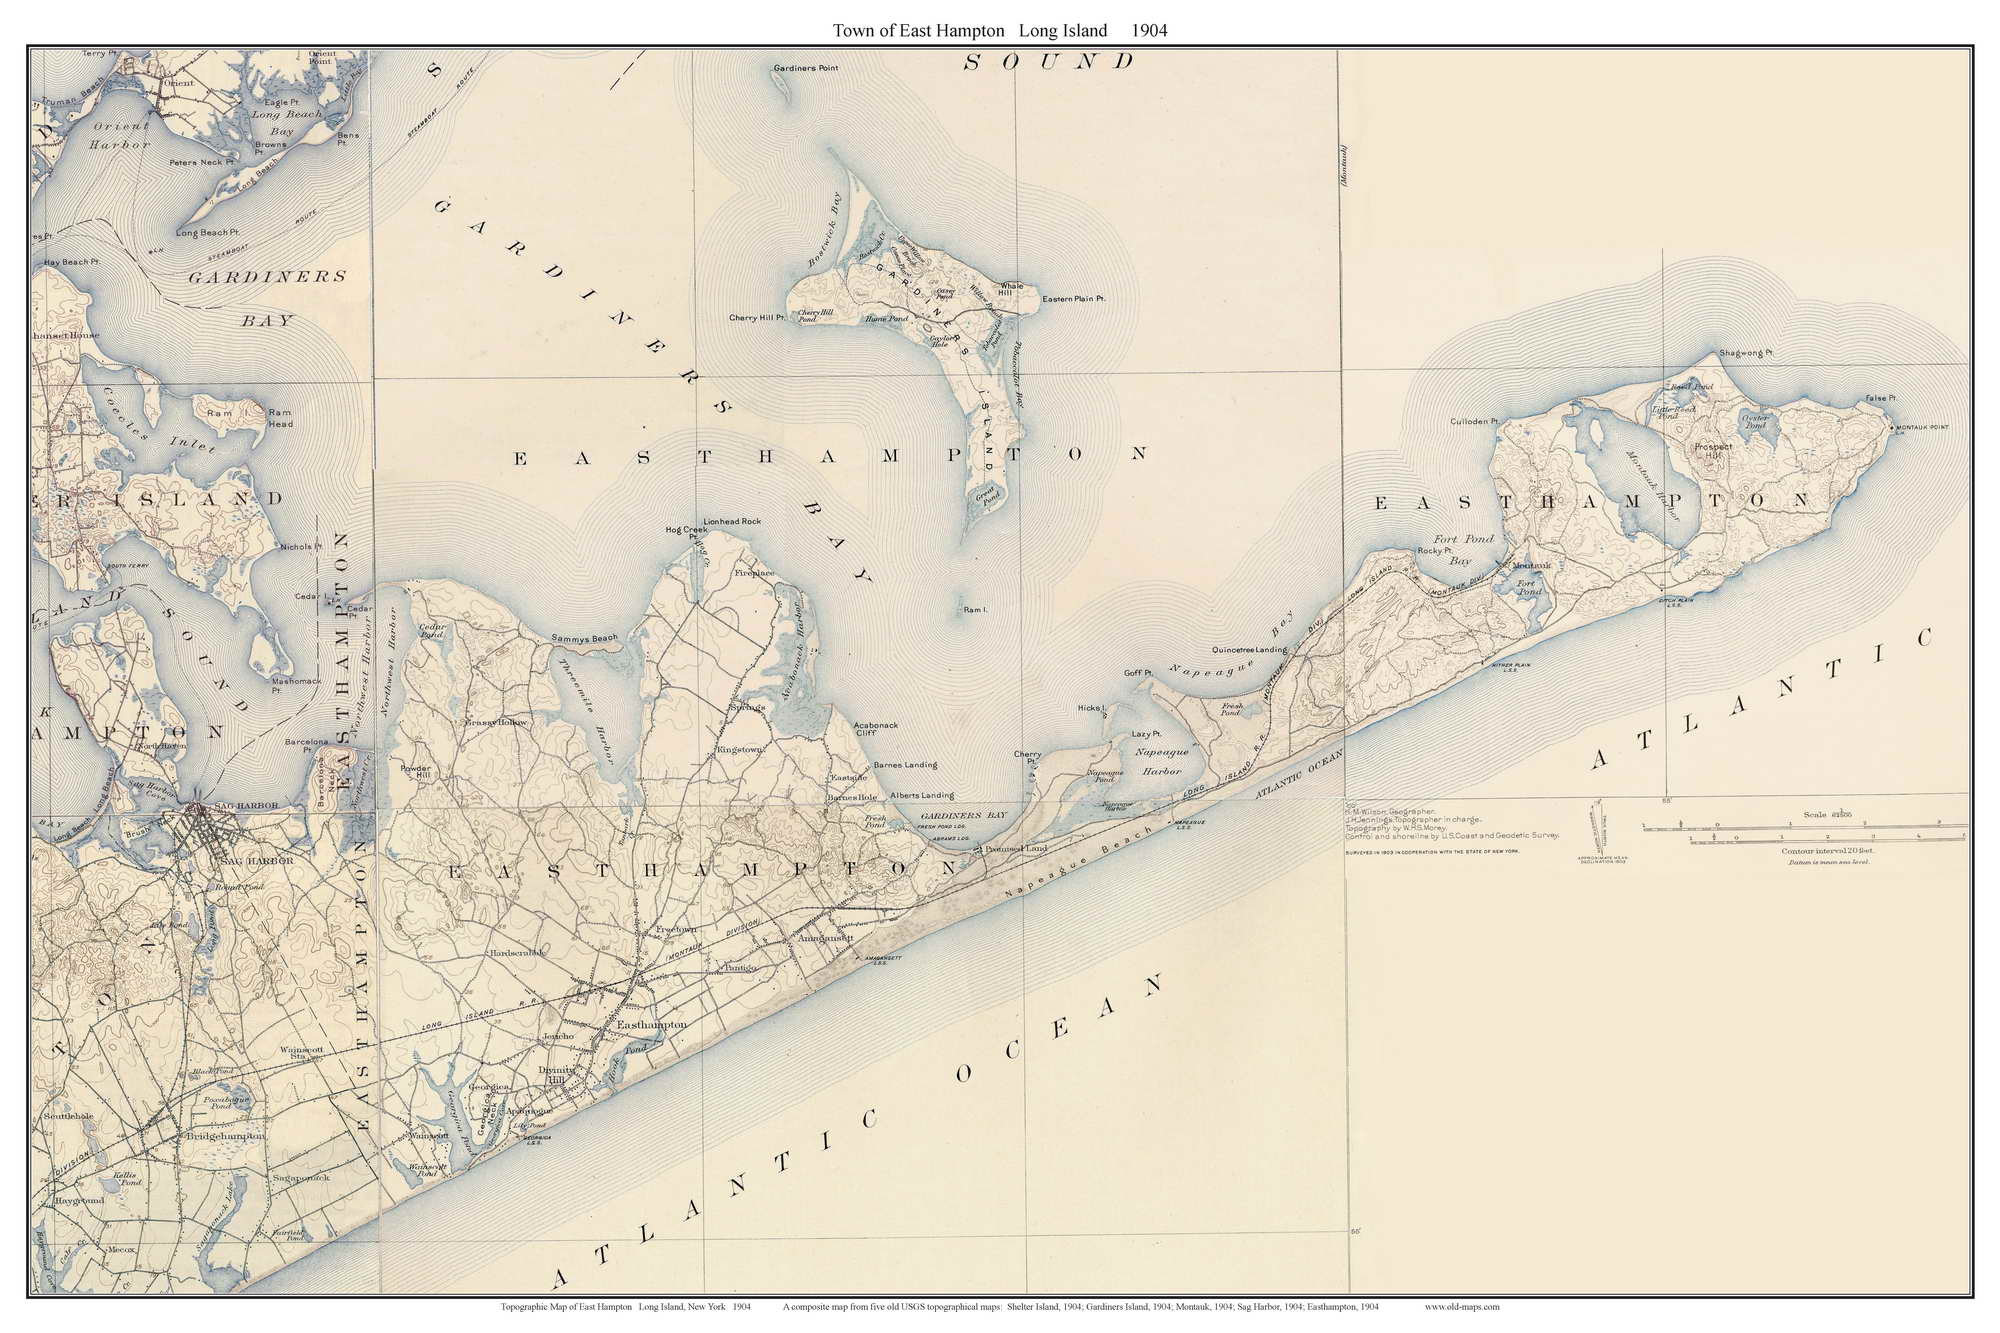 East Hampton 1904 Long Island New York Old USGS Topo Map | Etsy